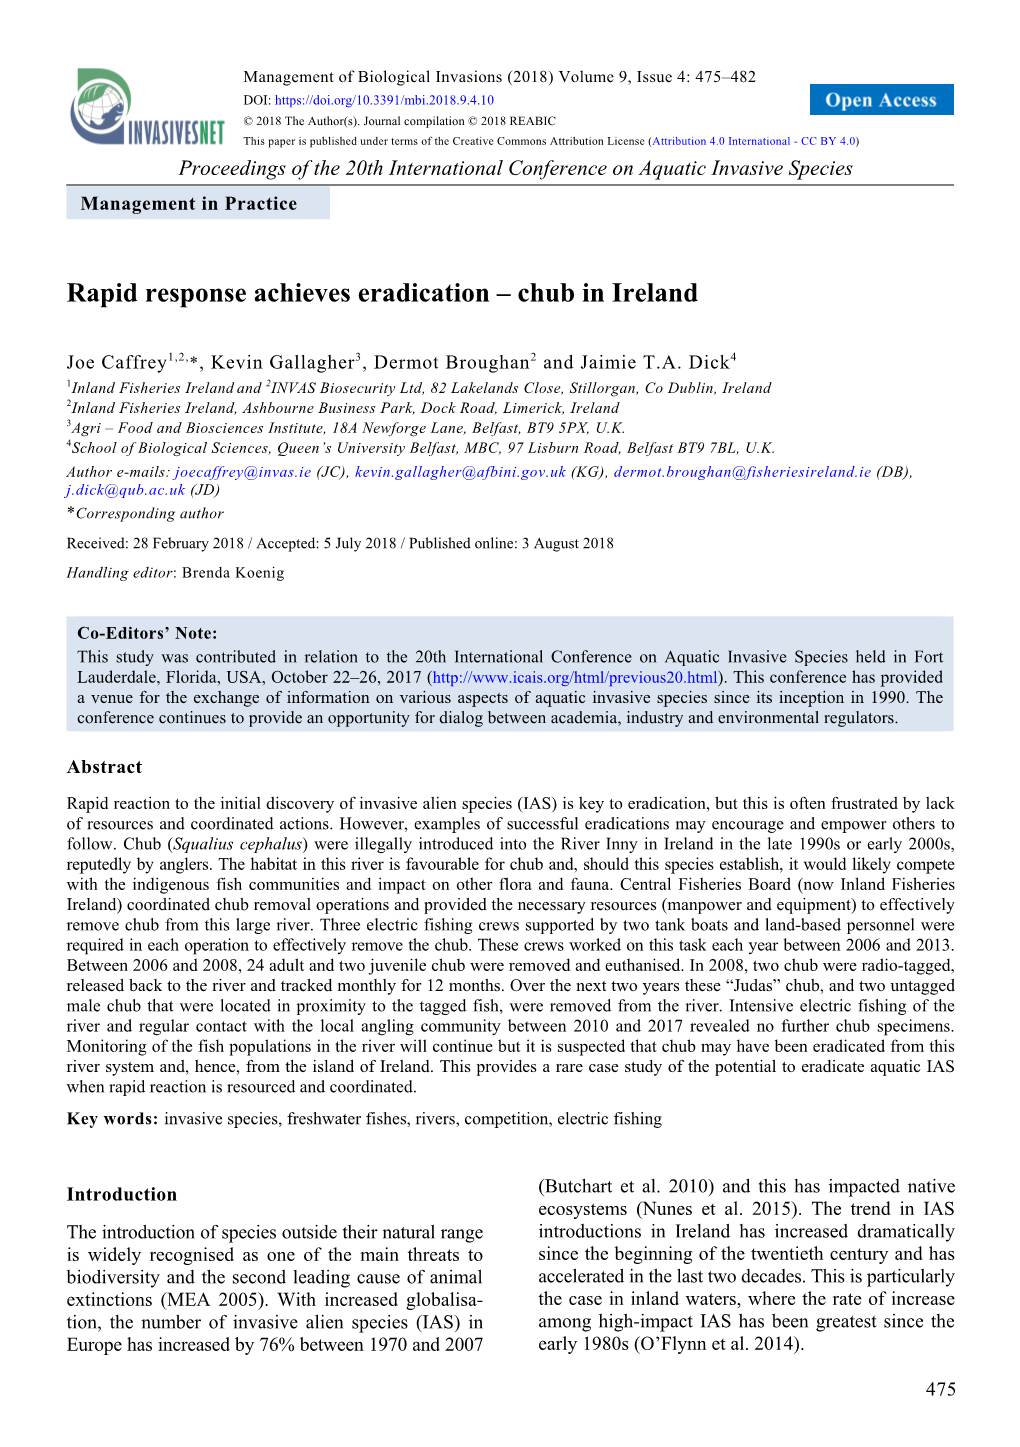 Rapid Response Achieves Eradication – Chub in Ireland